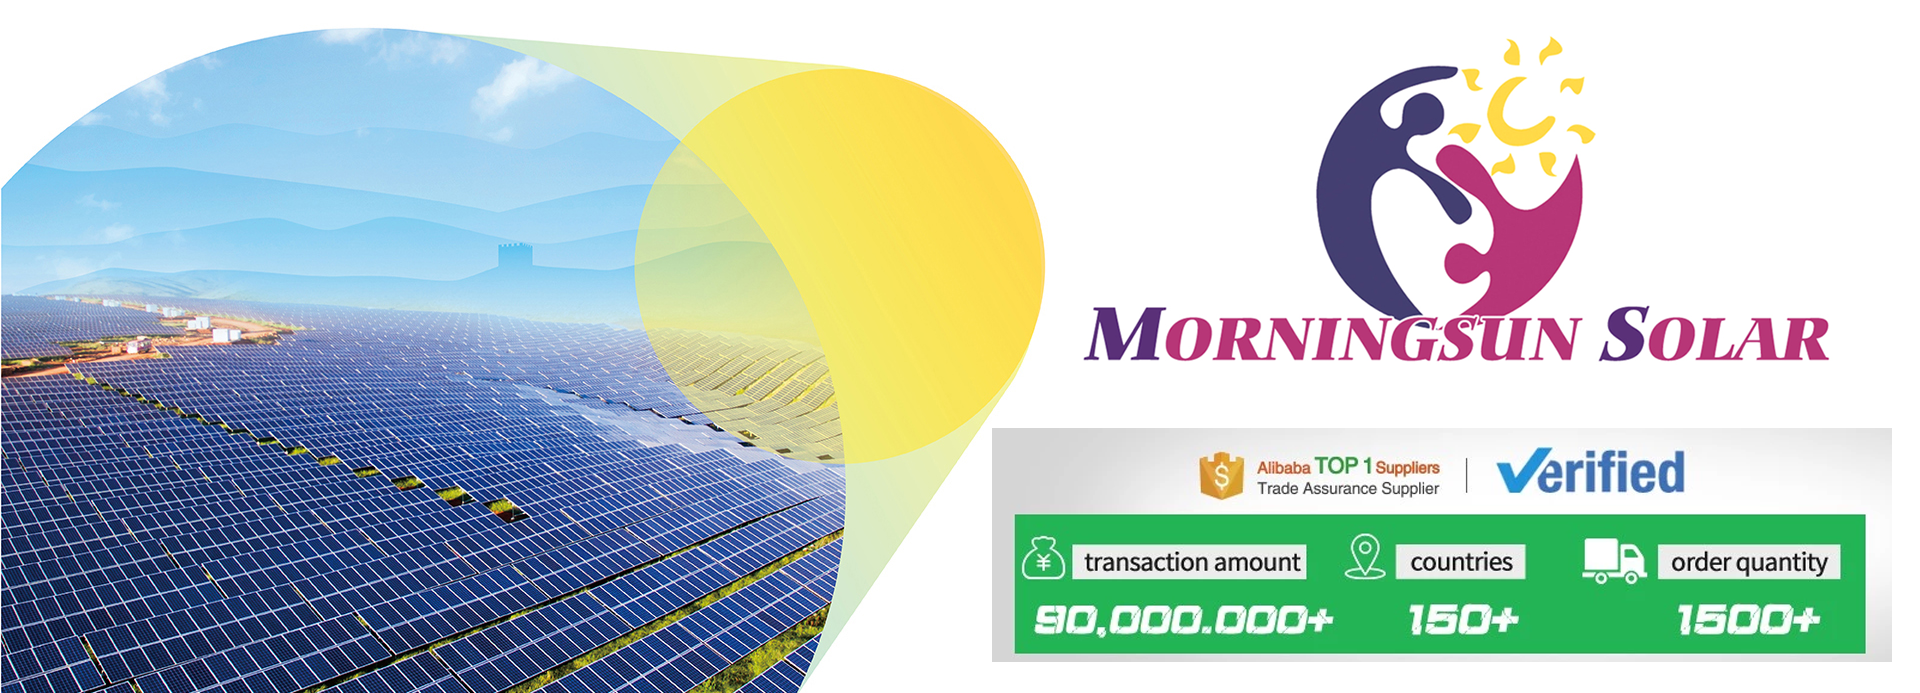 Small solar pv panel 50 watt size of showroom/50watt in nepal Monocrystalline